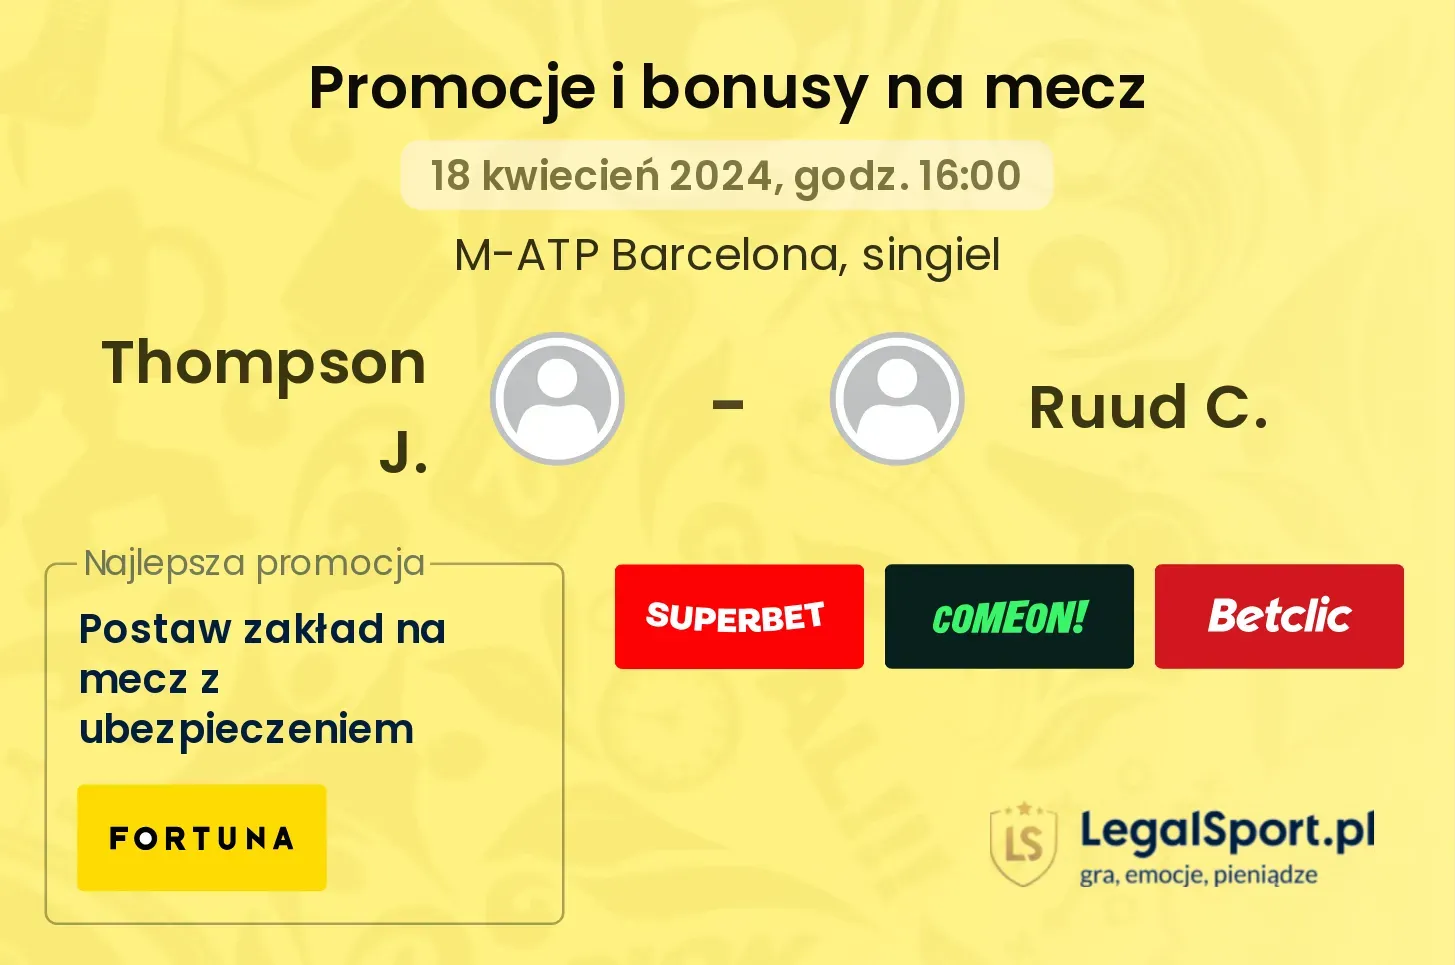 Thompson J. - Ruud C. promocje bonusy na mecz